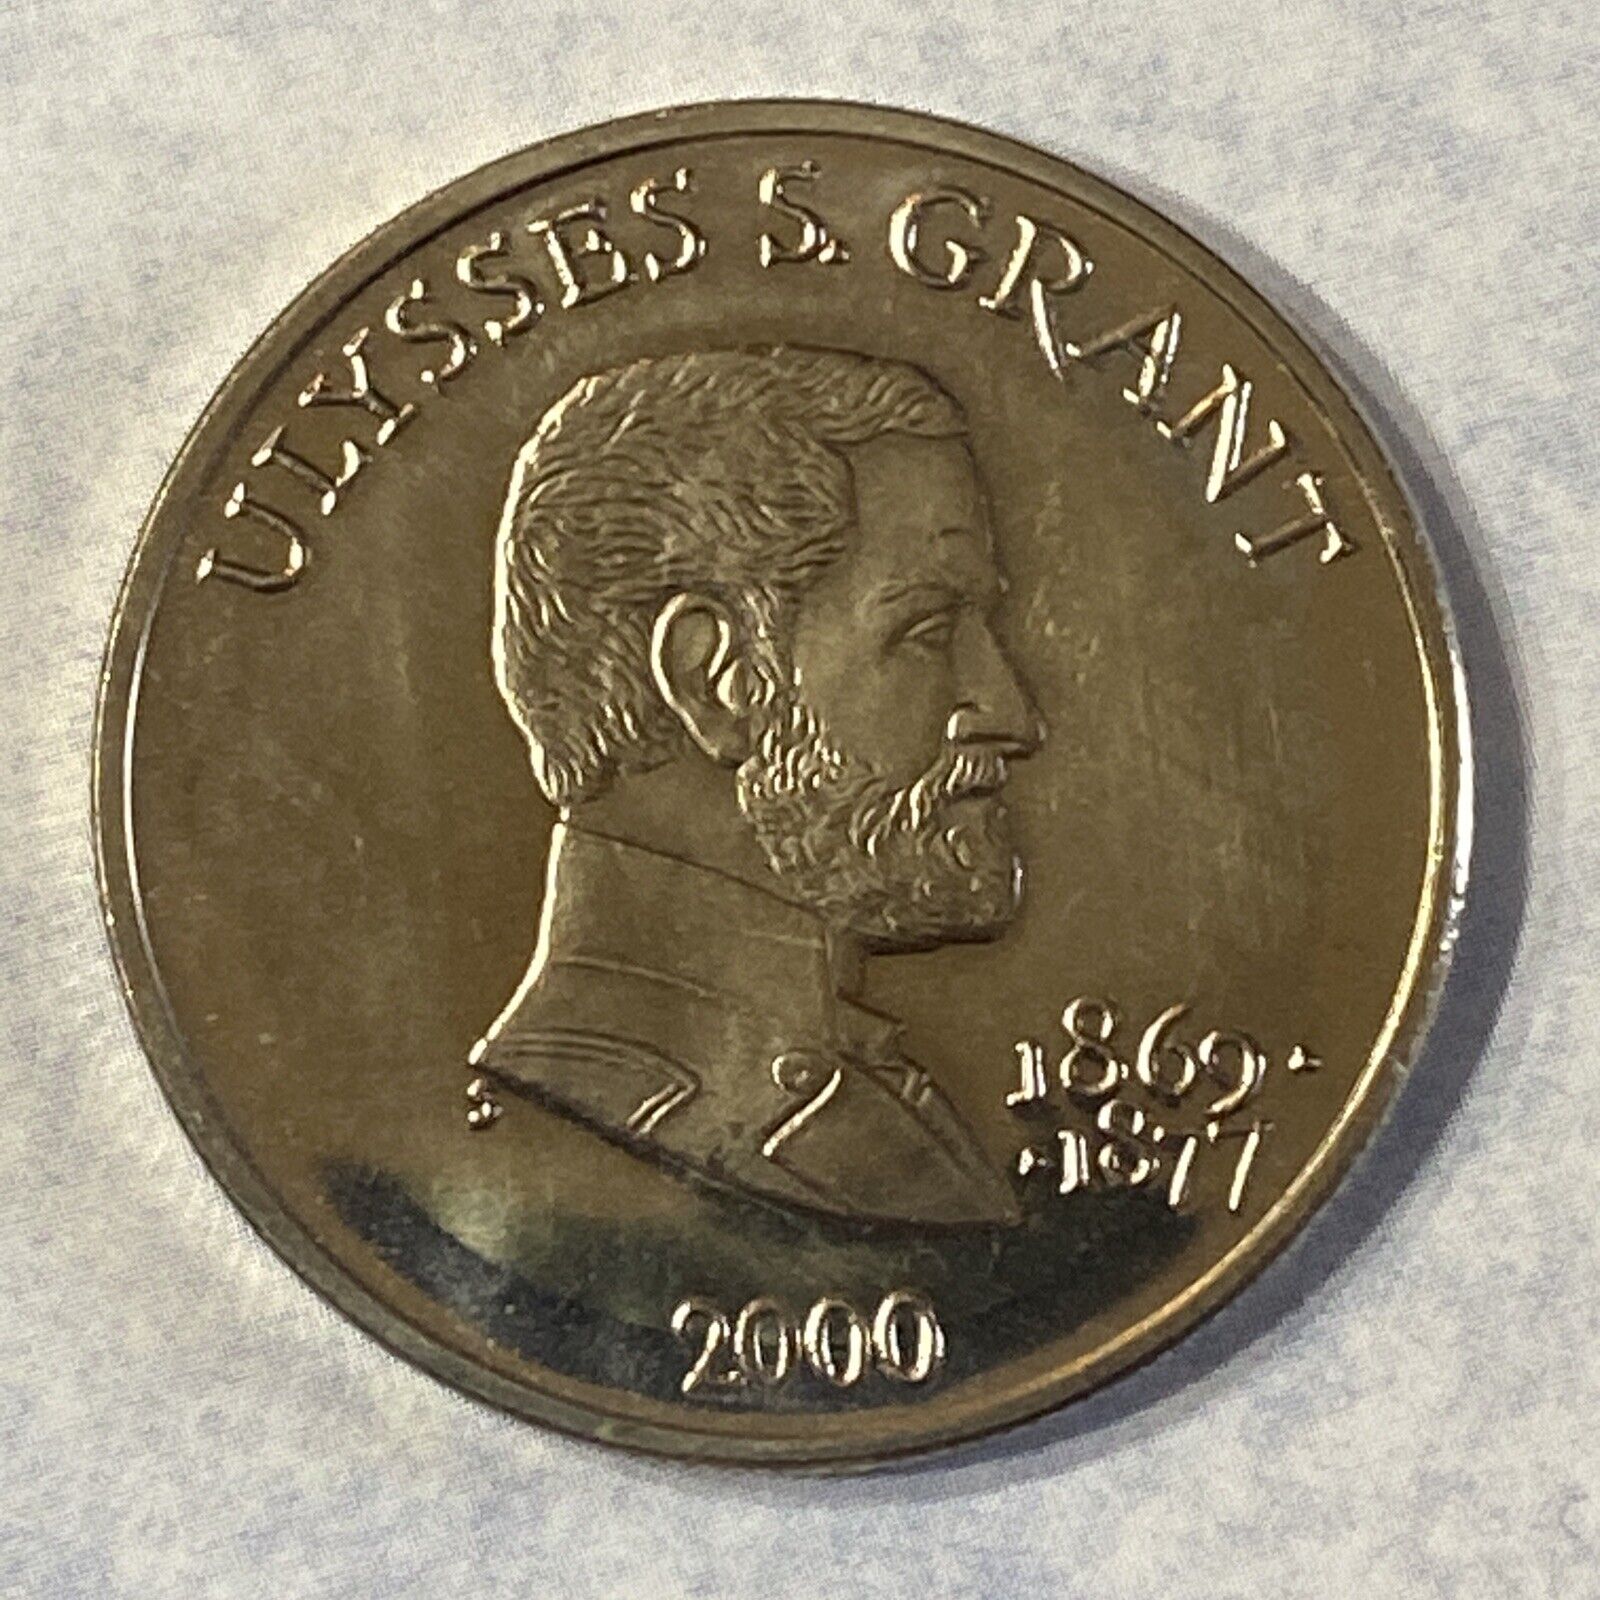 Ulysses S Grant - 2000 Republic Of Liberia Five Dollar $5 Coin - Collectors Coin